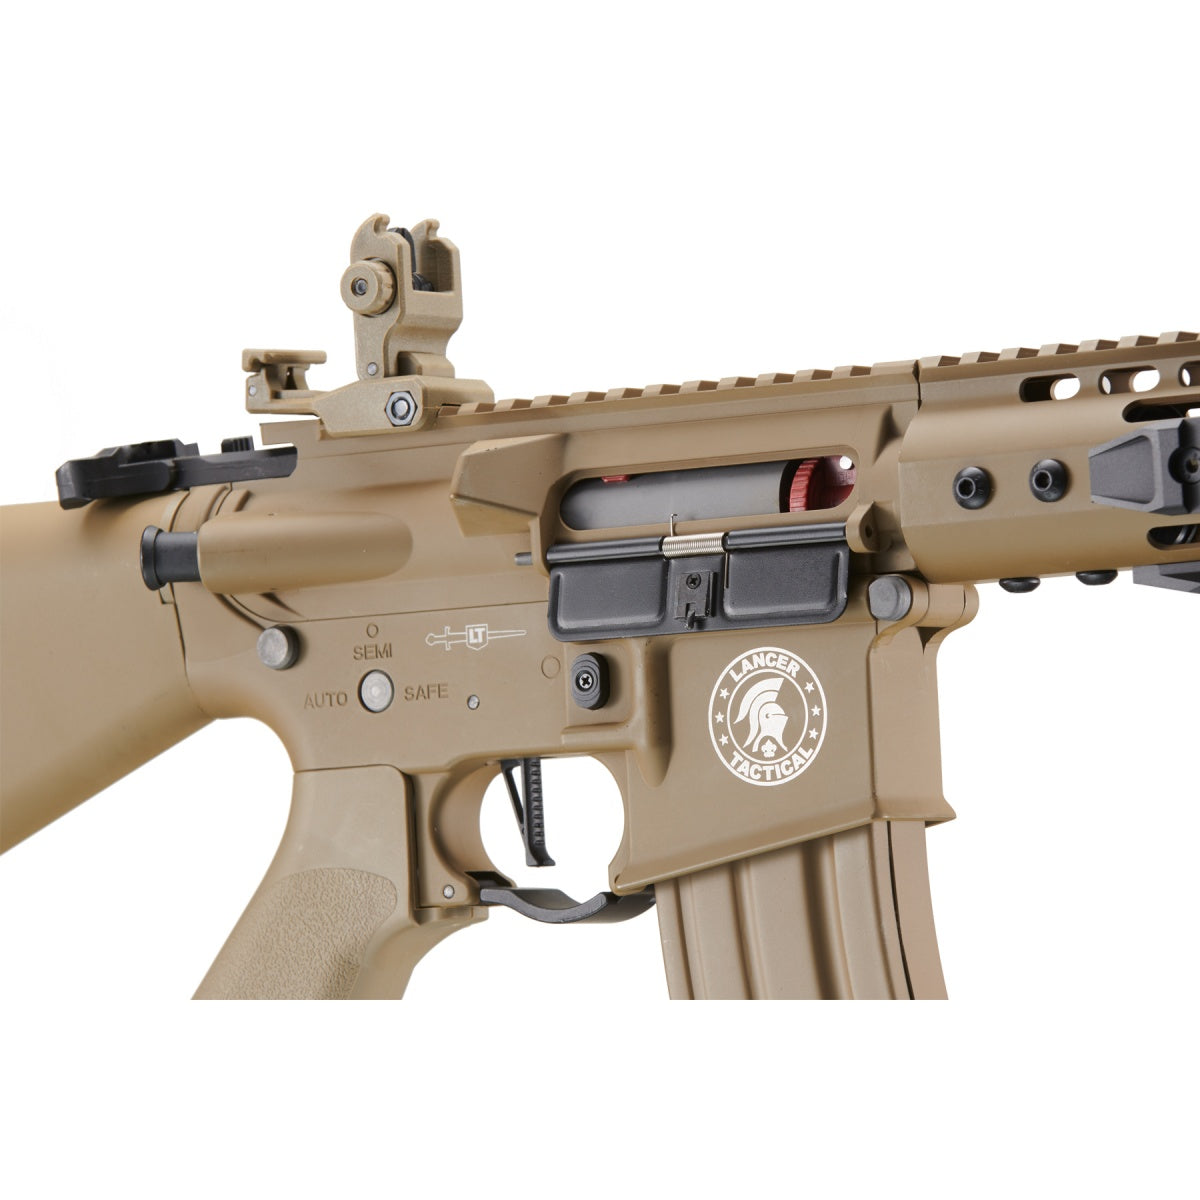 Lancer Tactical Proline 7" KeyMod Airsoft AEG Rifle w/ Stubby Stock - ssairsoft.com